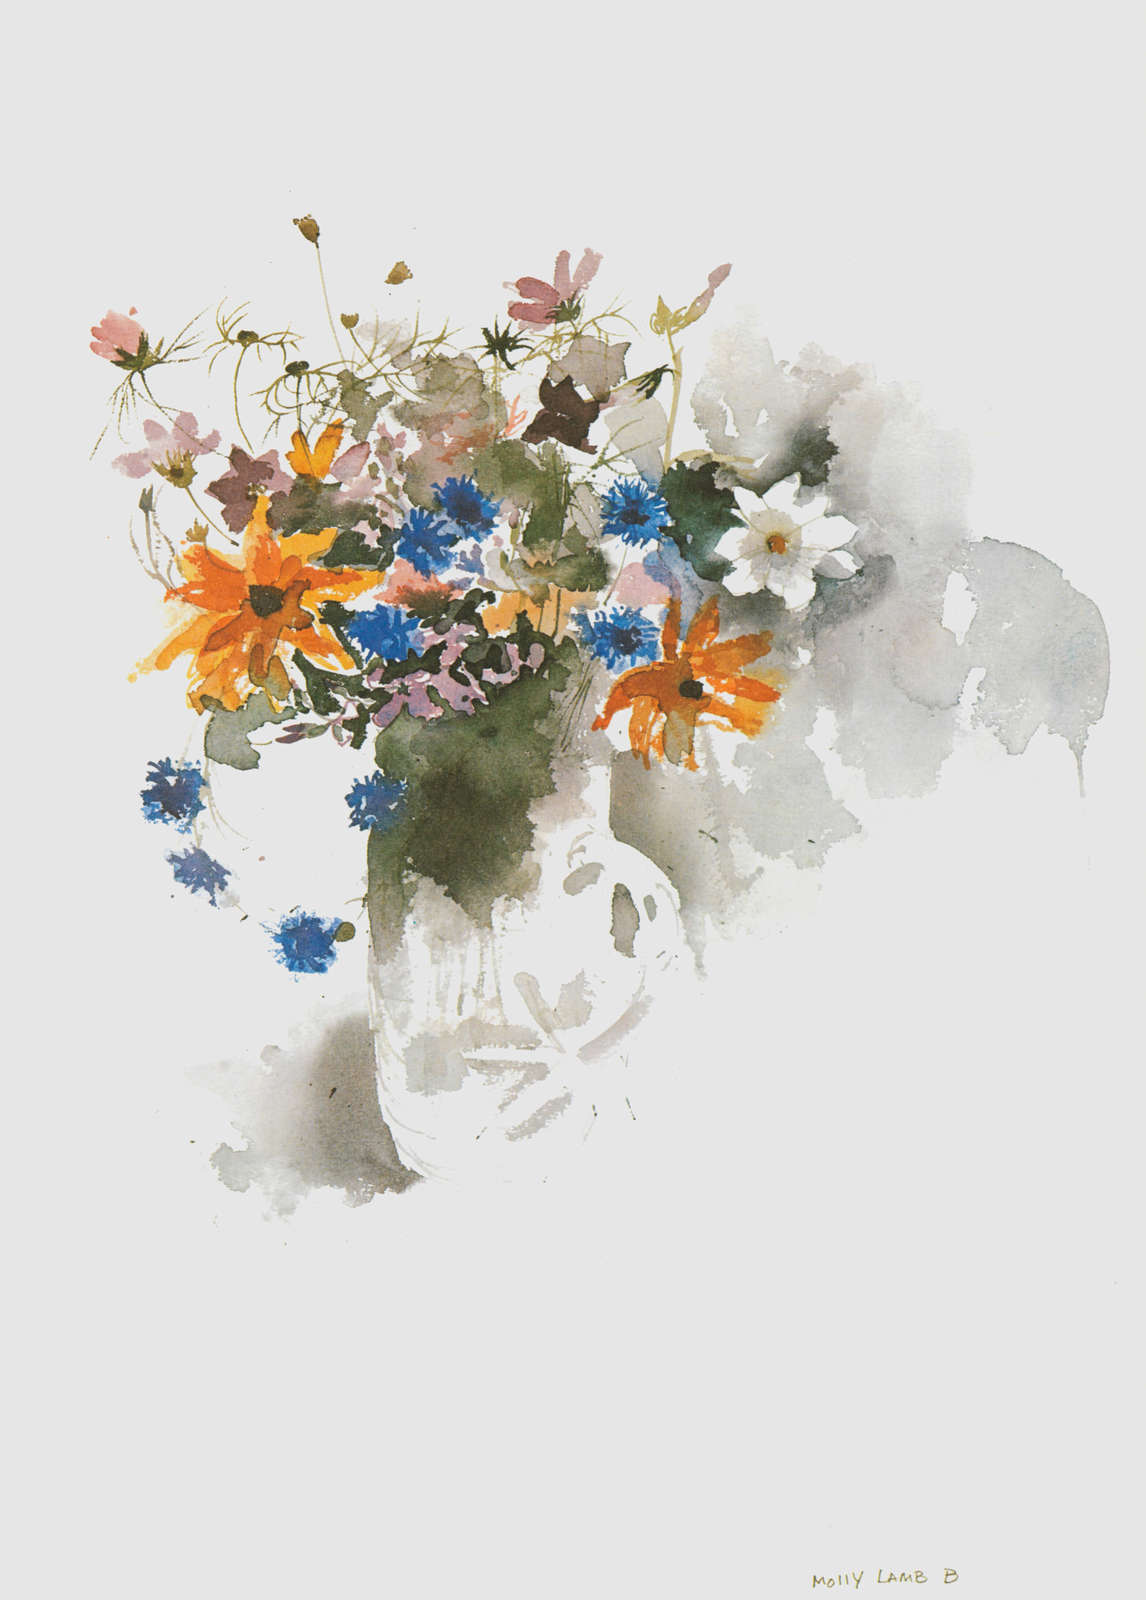 Molly Lamb Bobak, A Jug of August Flowers